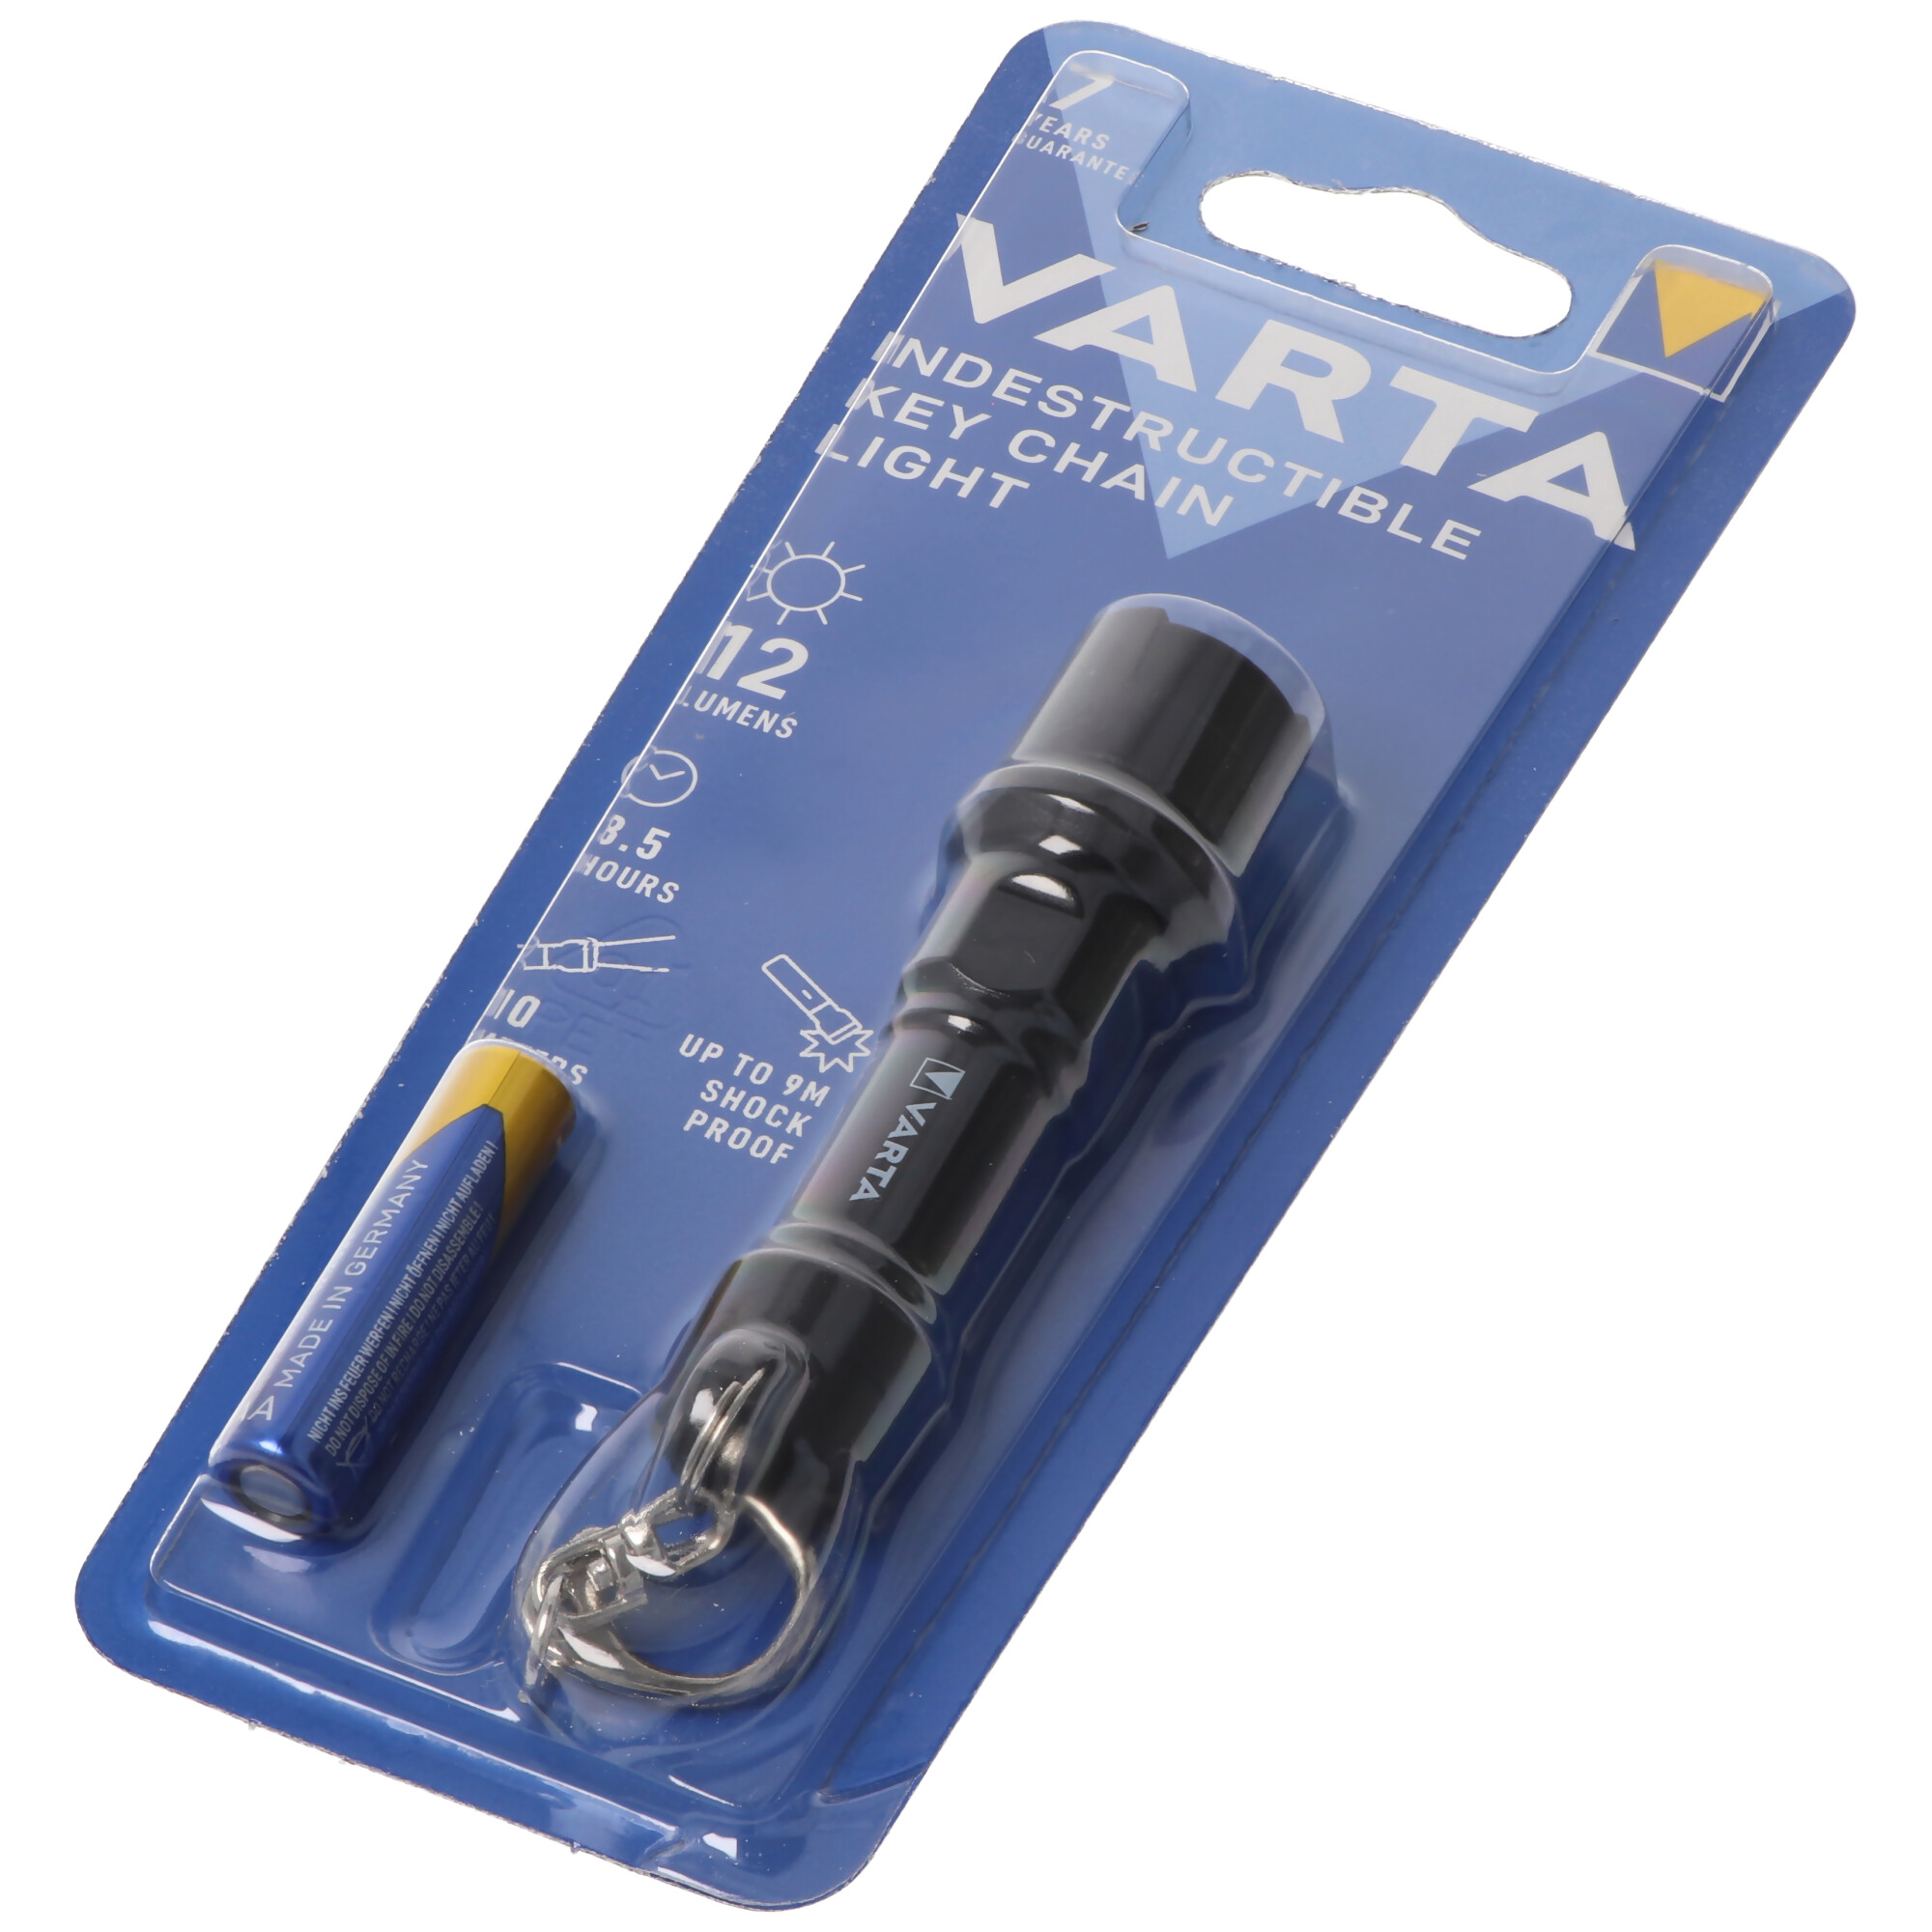 Varta LED Taschenlampe Indestructible, Key Chain Light 12lm, inkl. 1x Batterie Alkaline AAA, Retail Blister